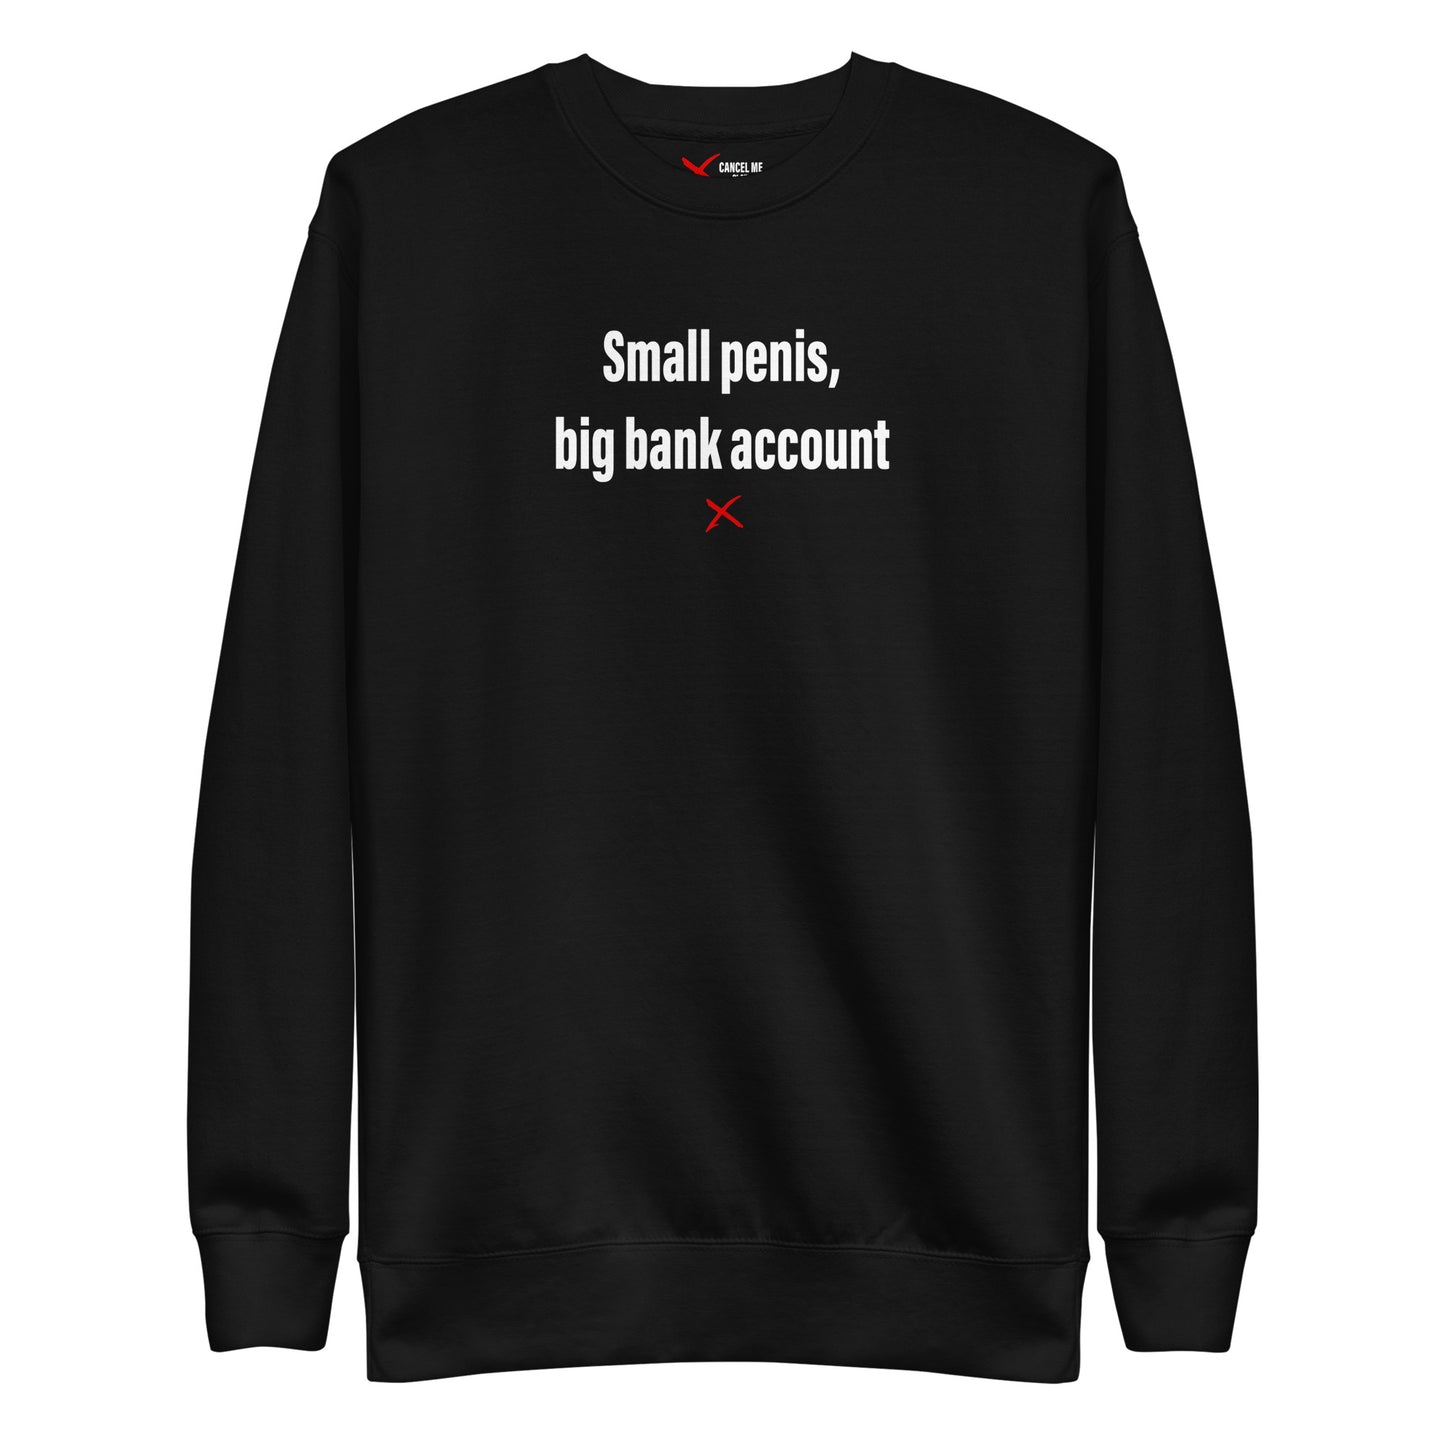 Small penis, big bank account - Sweatshirt